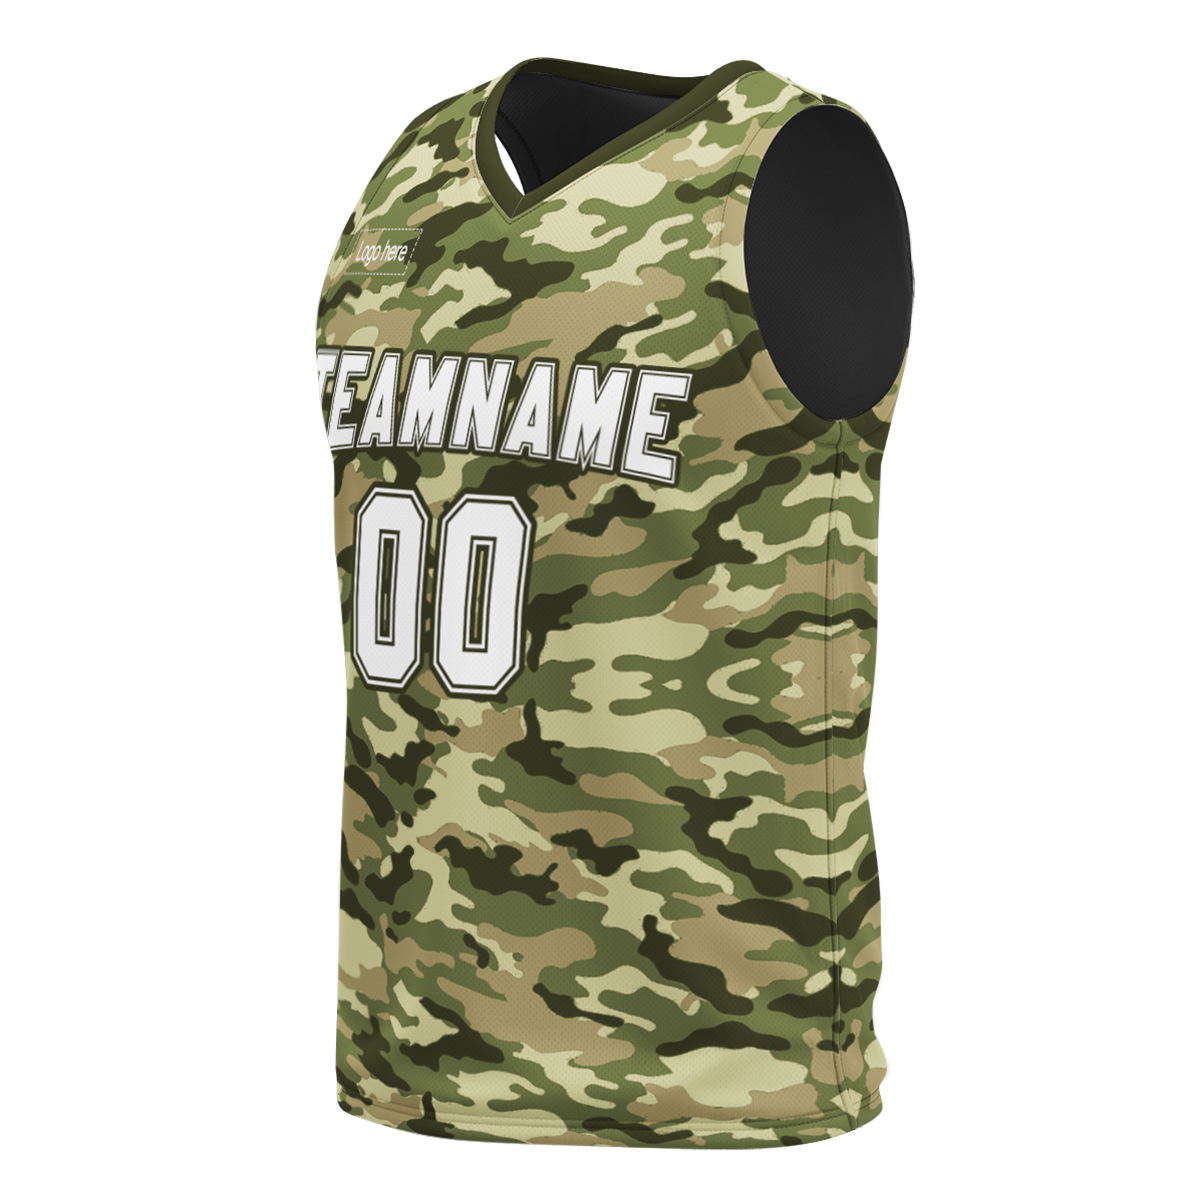 custom-your-own-team-made-basketball-jerseys-men-blank-sports-basketball-shorts-printed-basketball-wear-uniforms-at-cj-pod-5